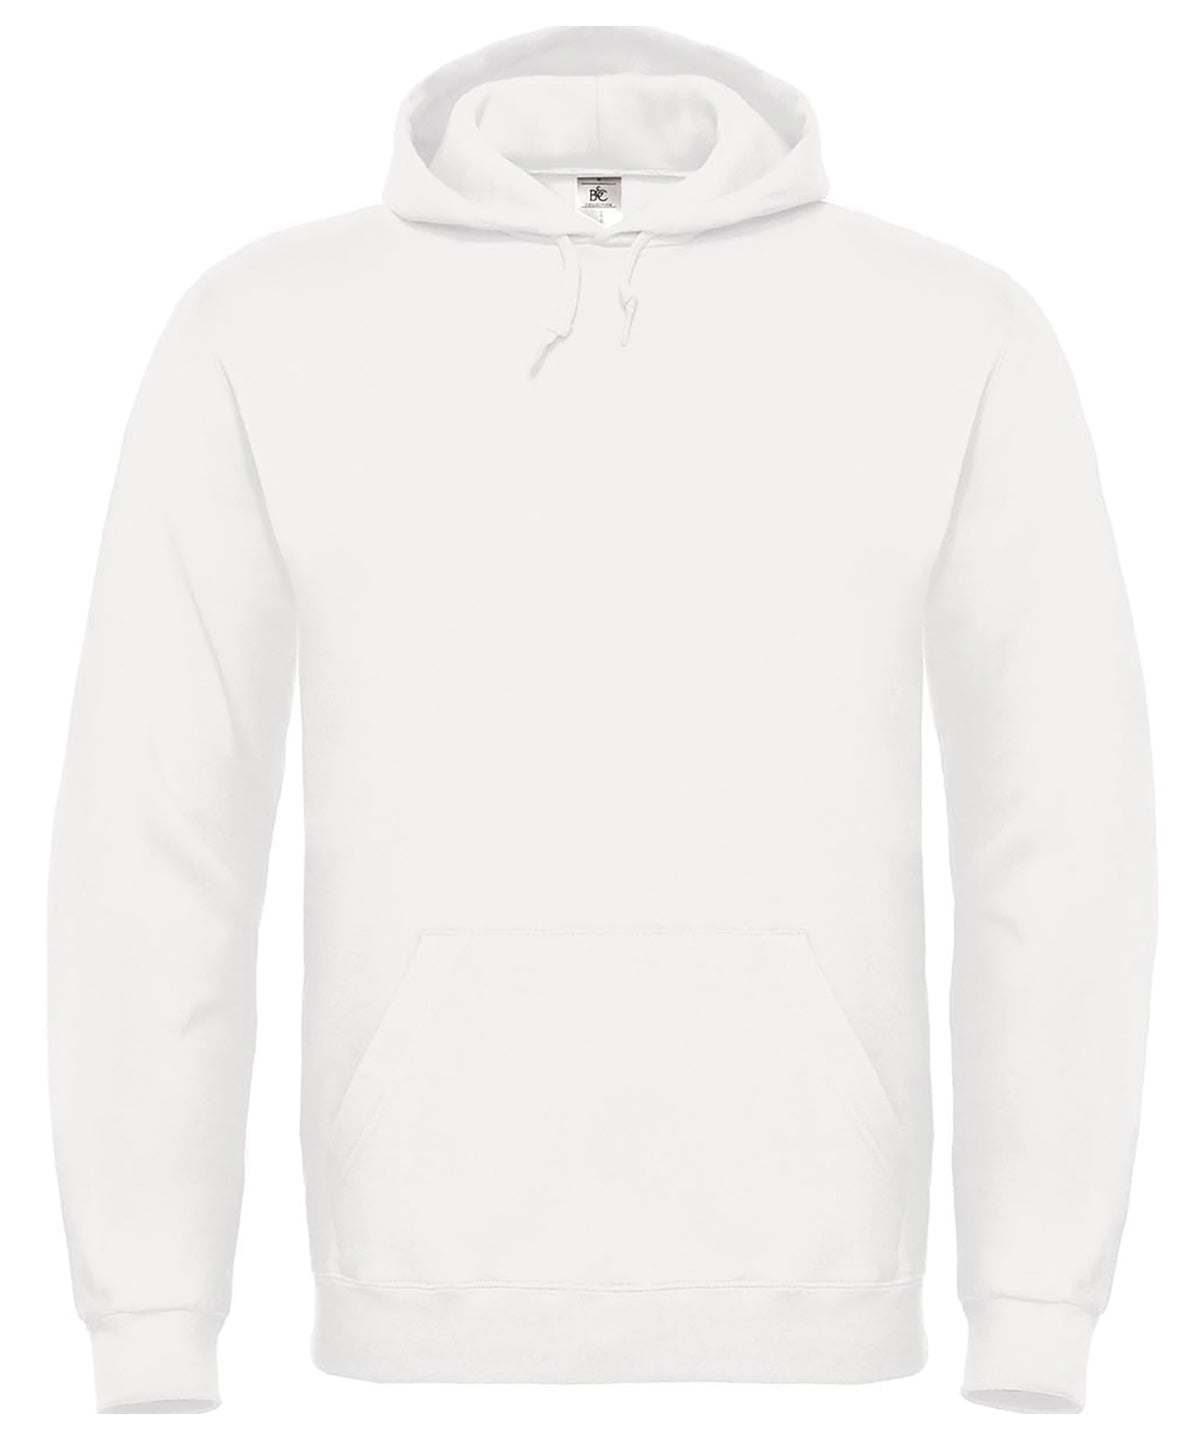 Hettupeysur - B&C ID.003 Hooded Sweatshirt